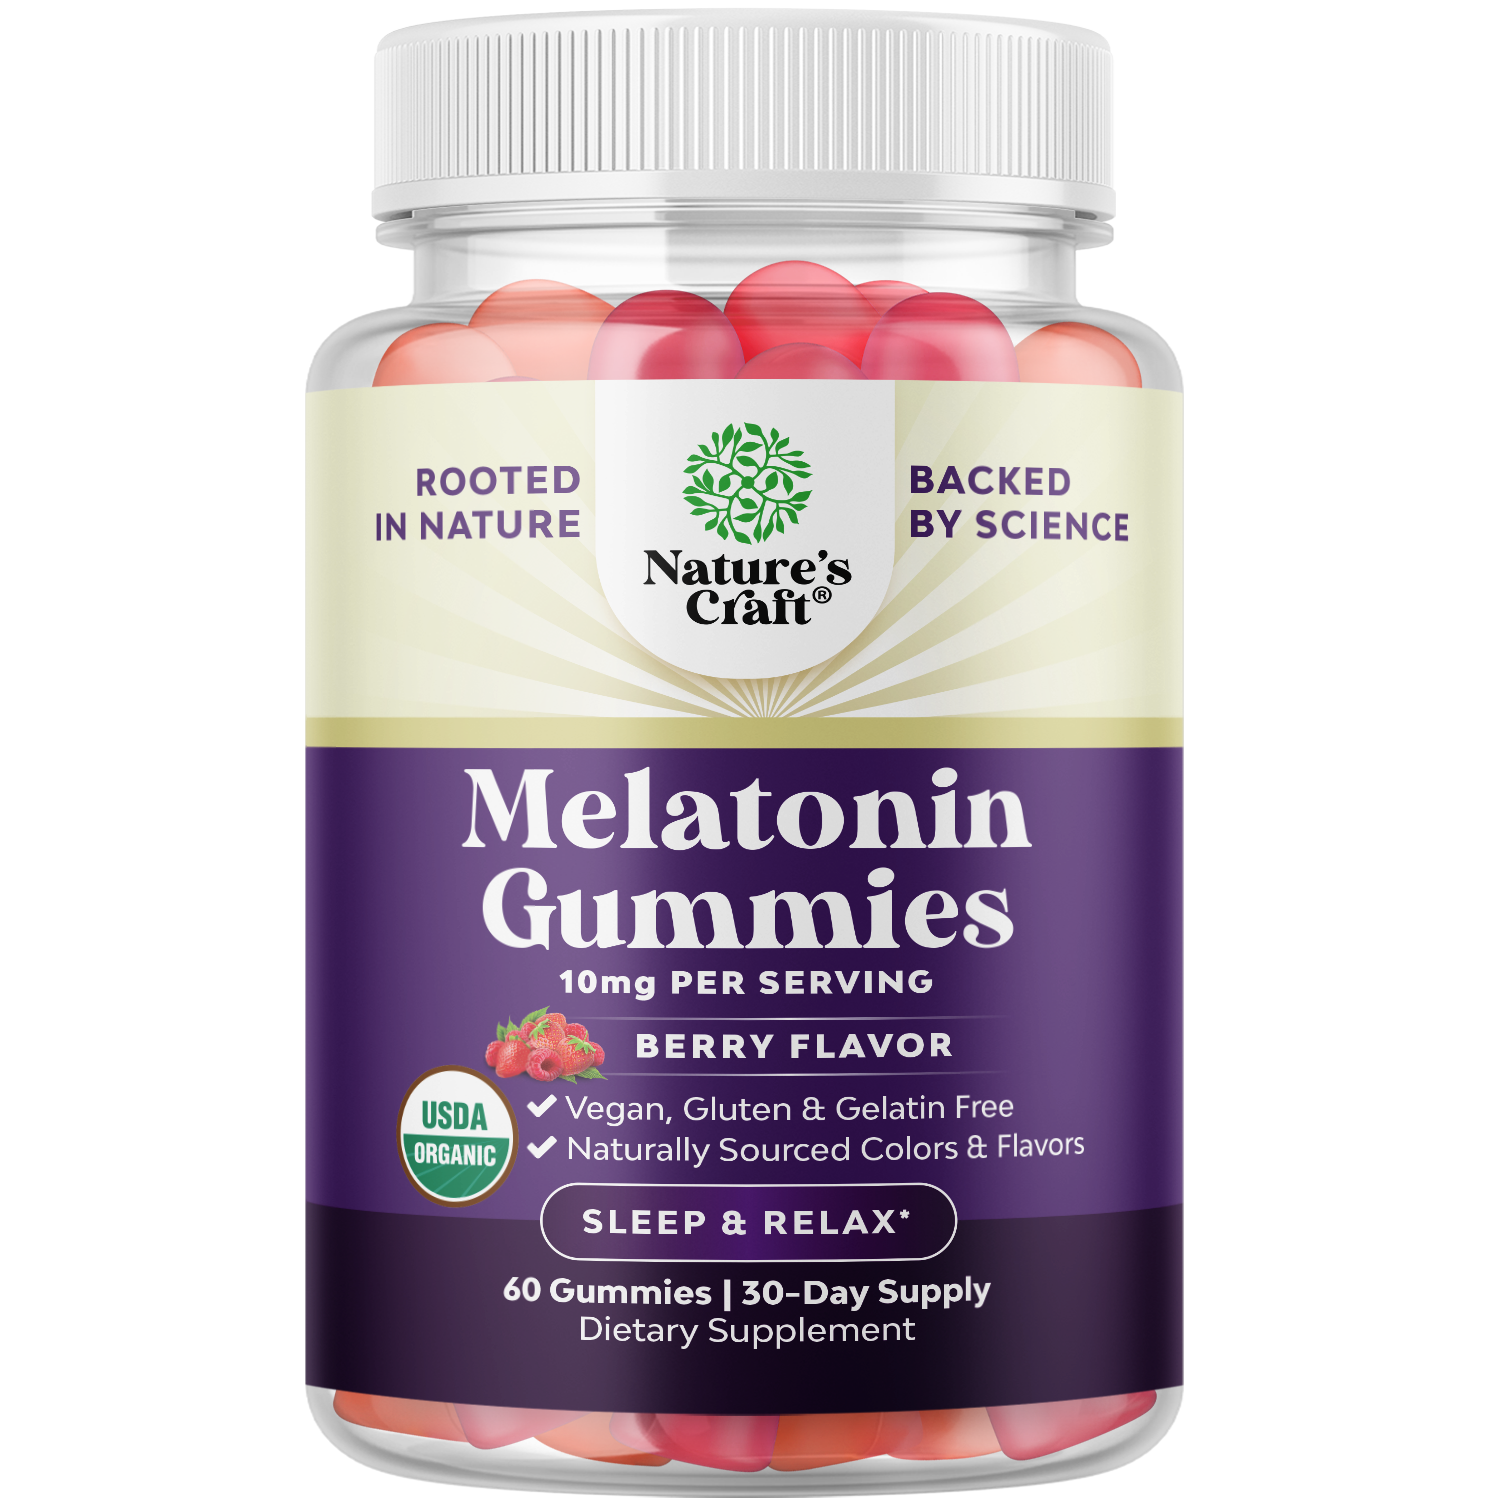 Melatonin Gummies 10mg per serving - Berry flavor